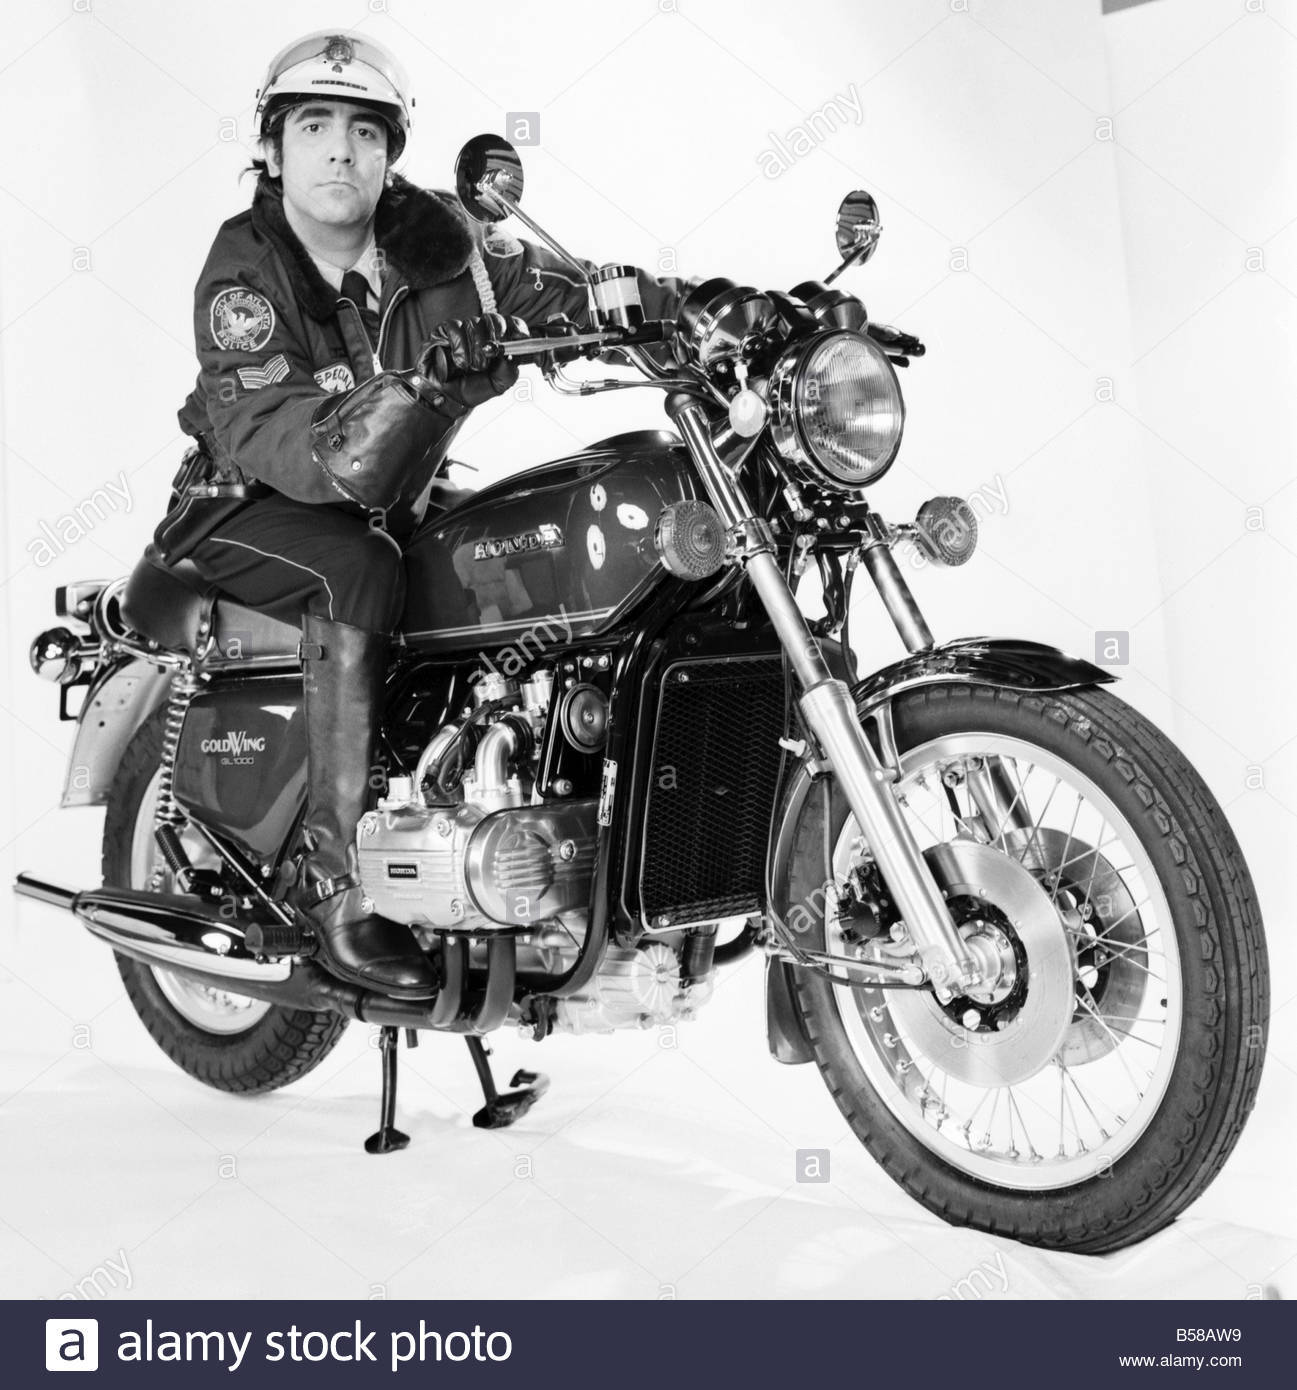 keith-moon-of-the-who-pop-group-on-a-honda-motorbike-january-1976-B58AW9.jpg